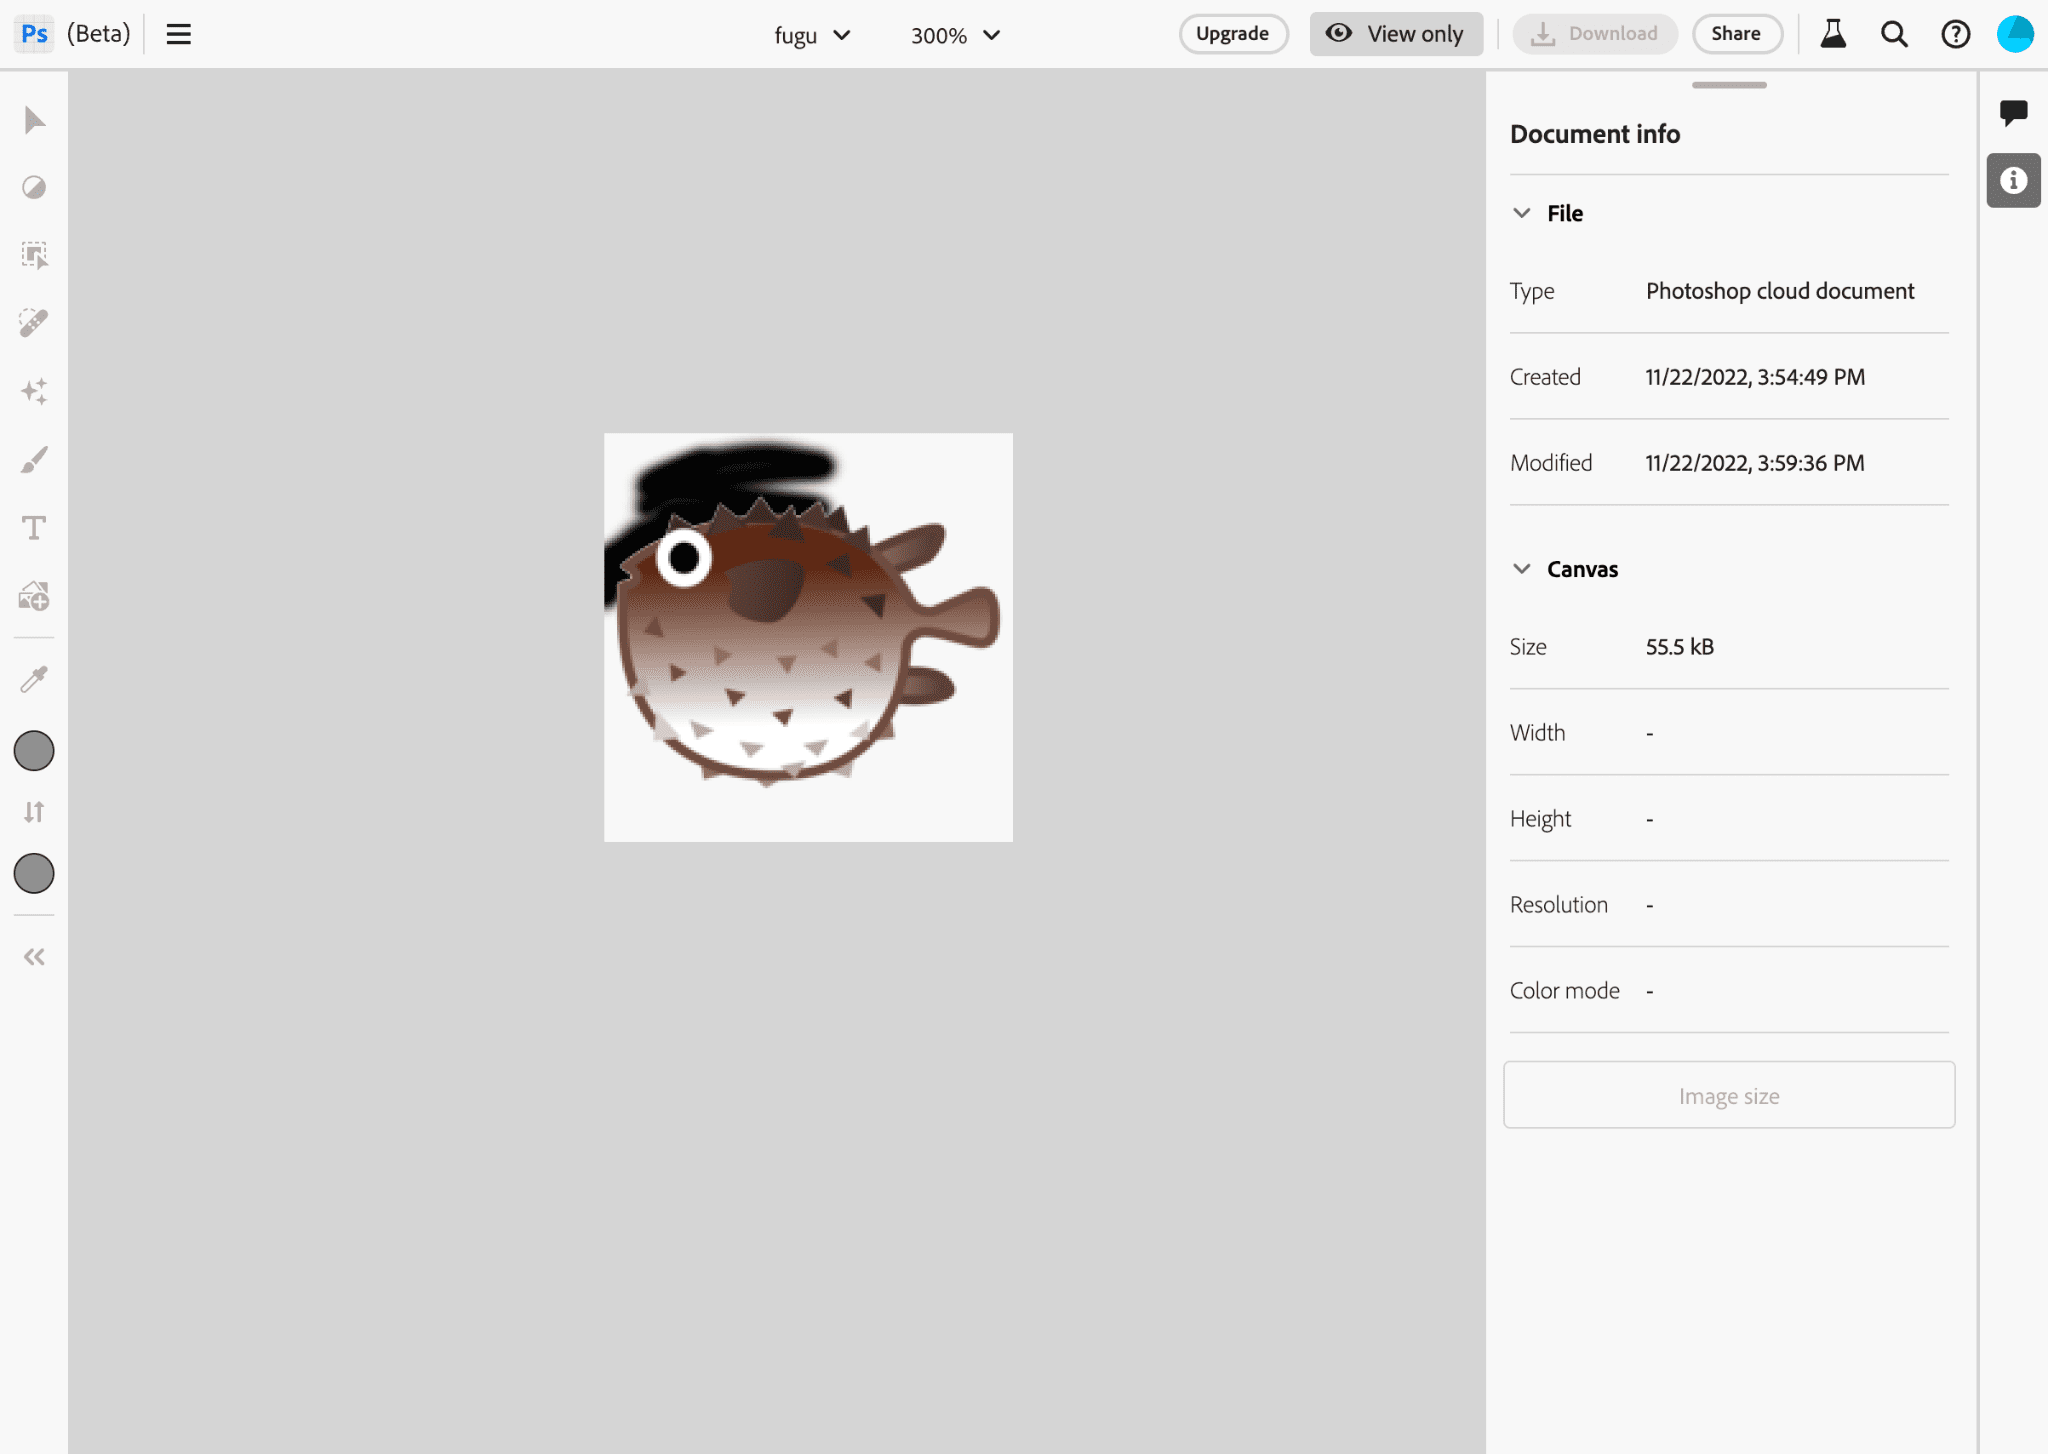 Project Fugu 로고 이미지를 수정하는 Photoshop 앱